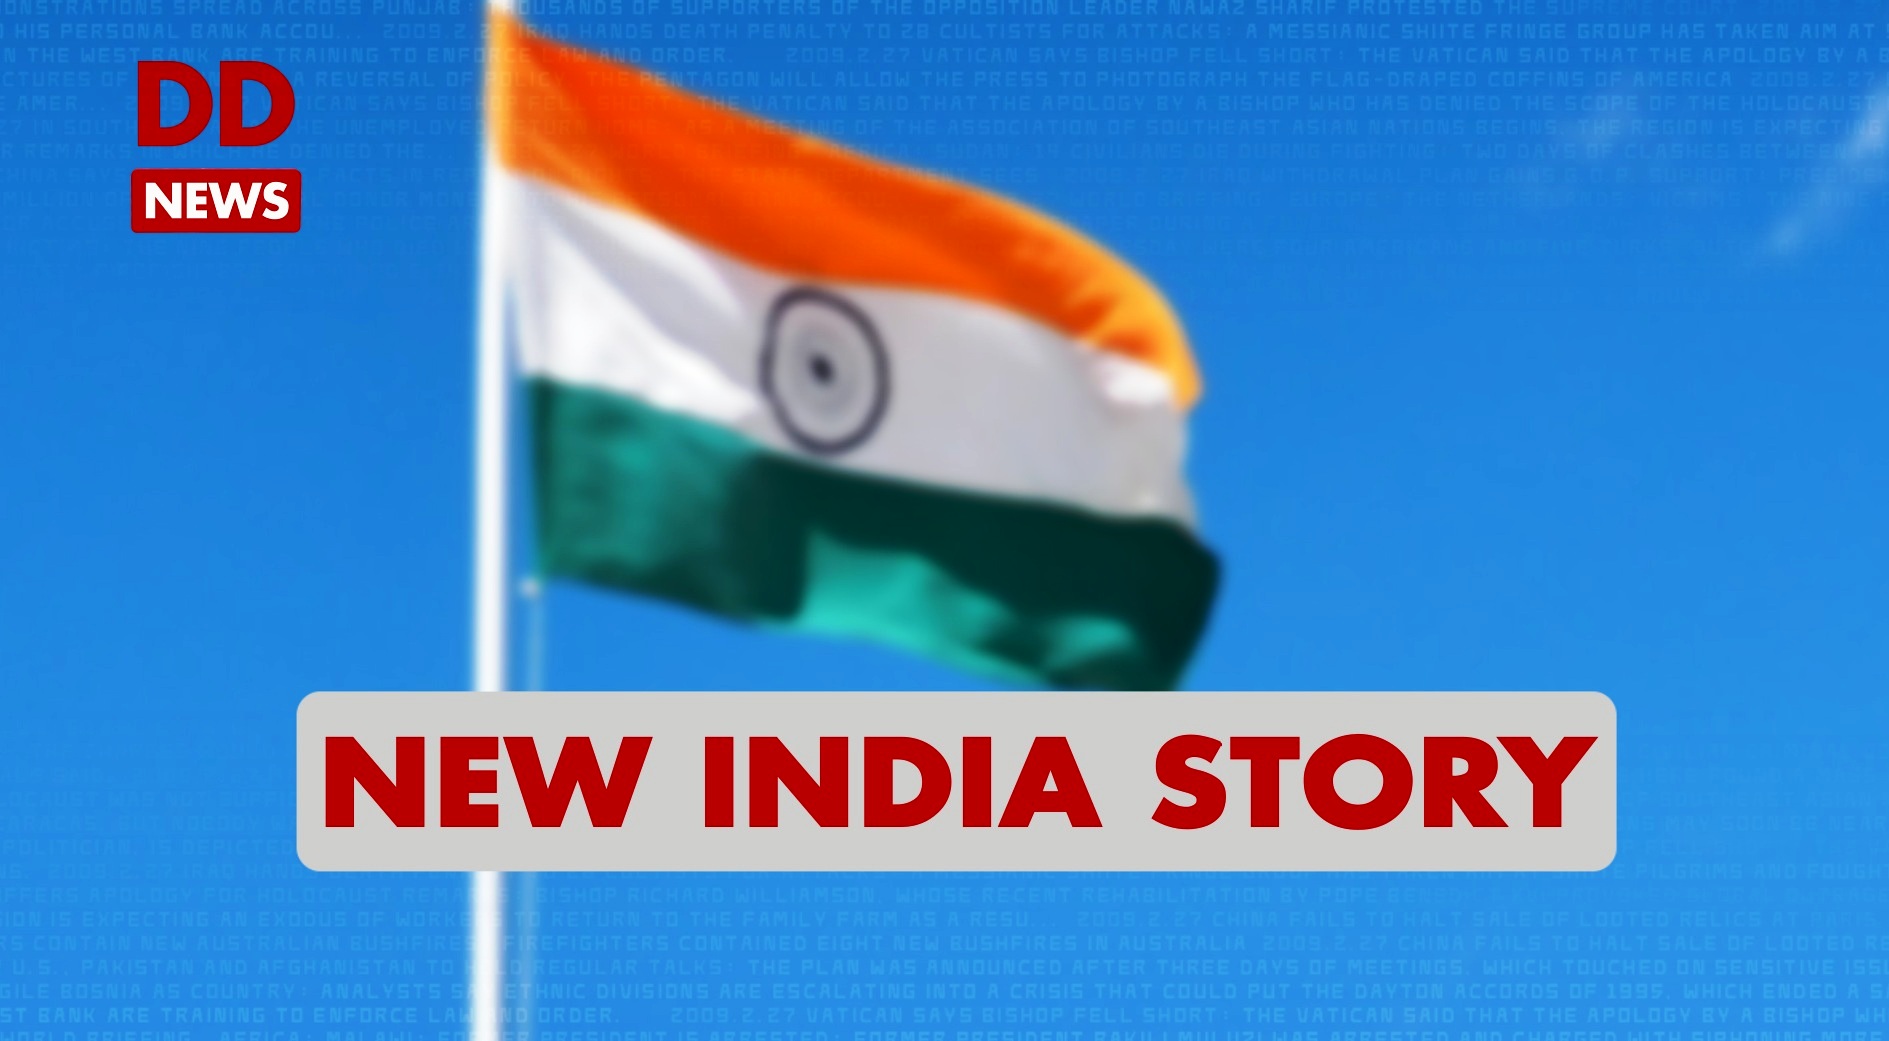 New India Story / Peddapalli / Telangana / Poshan Mission